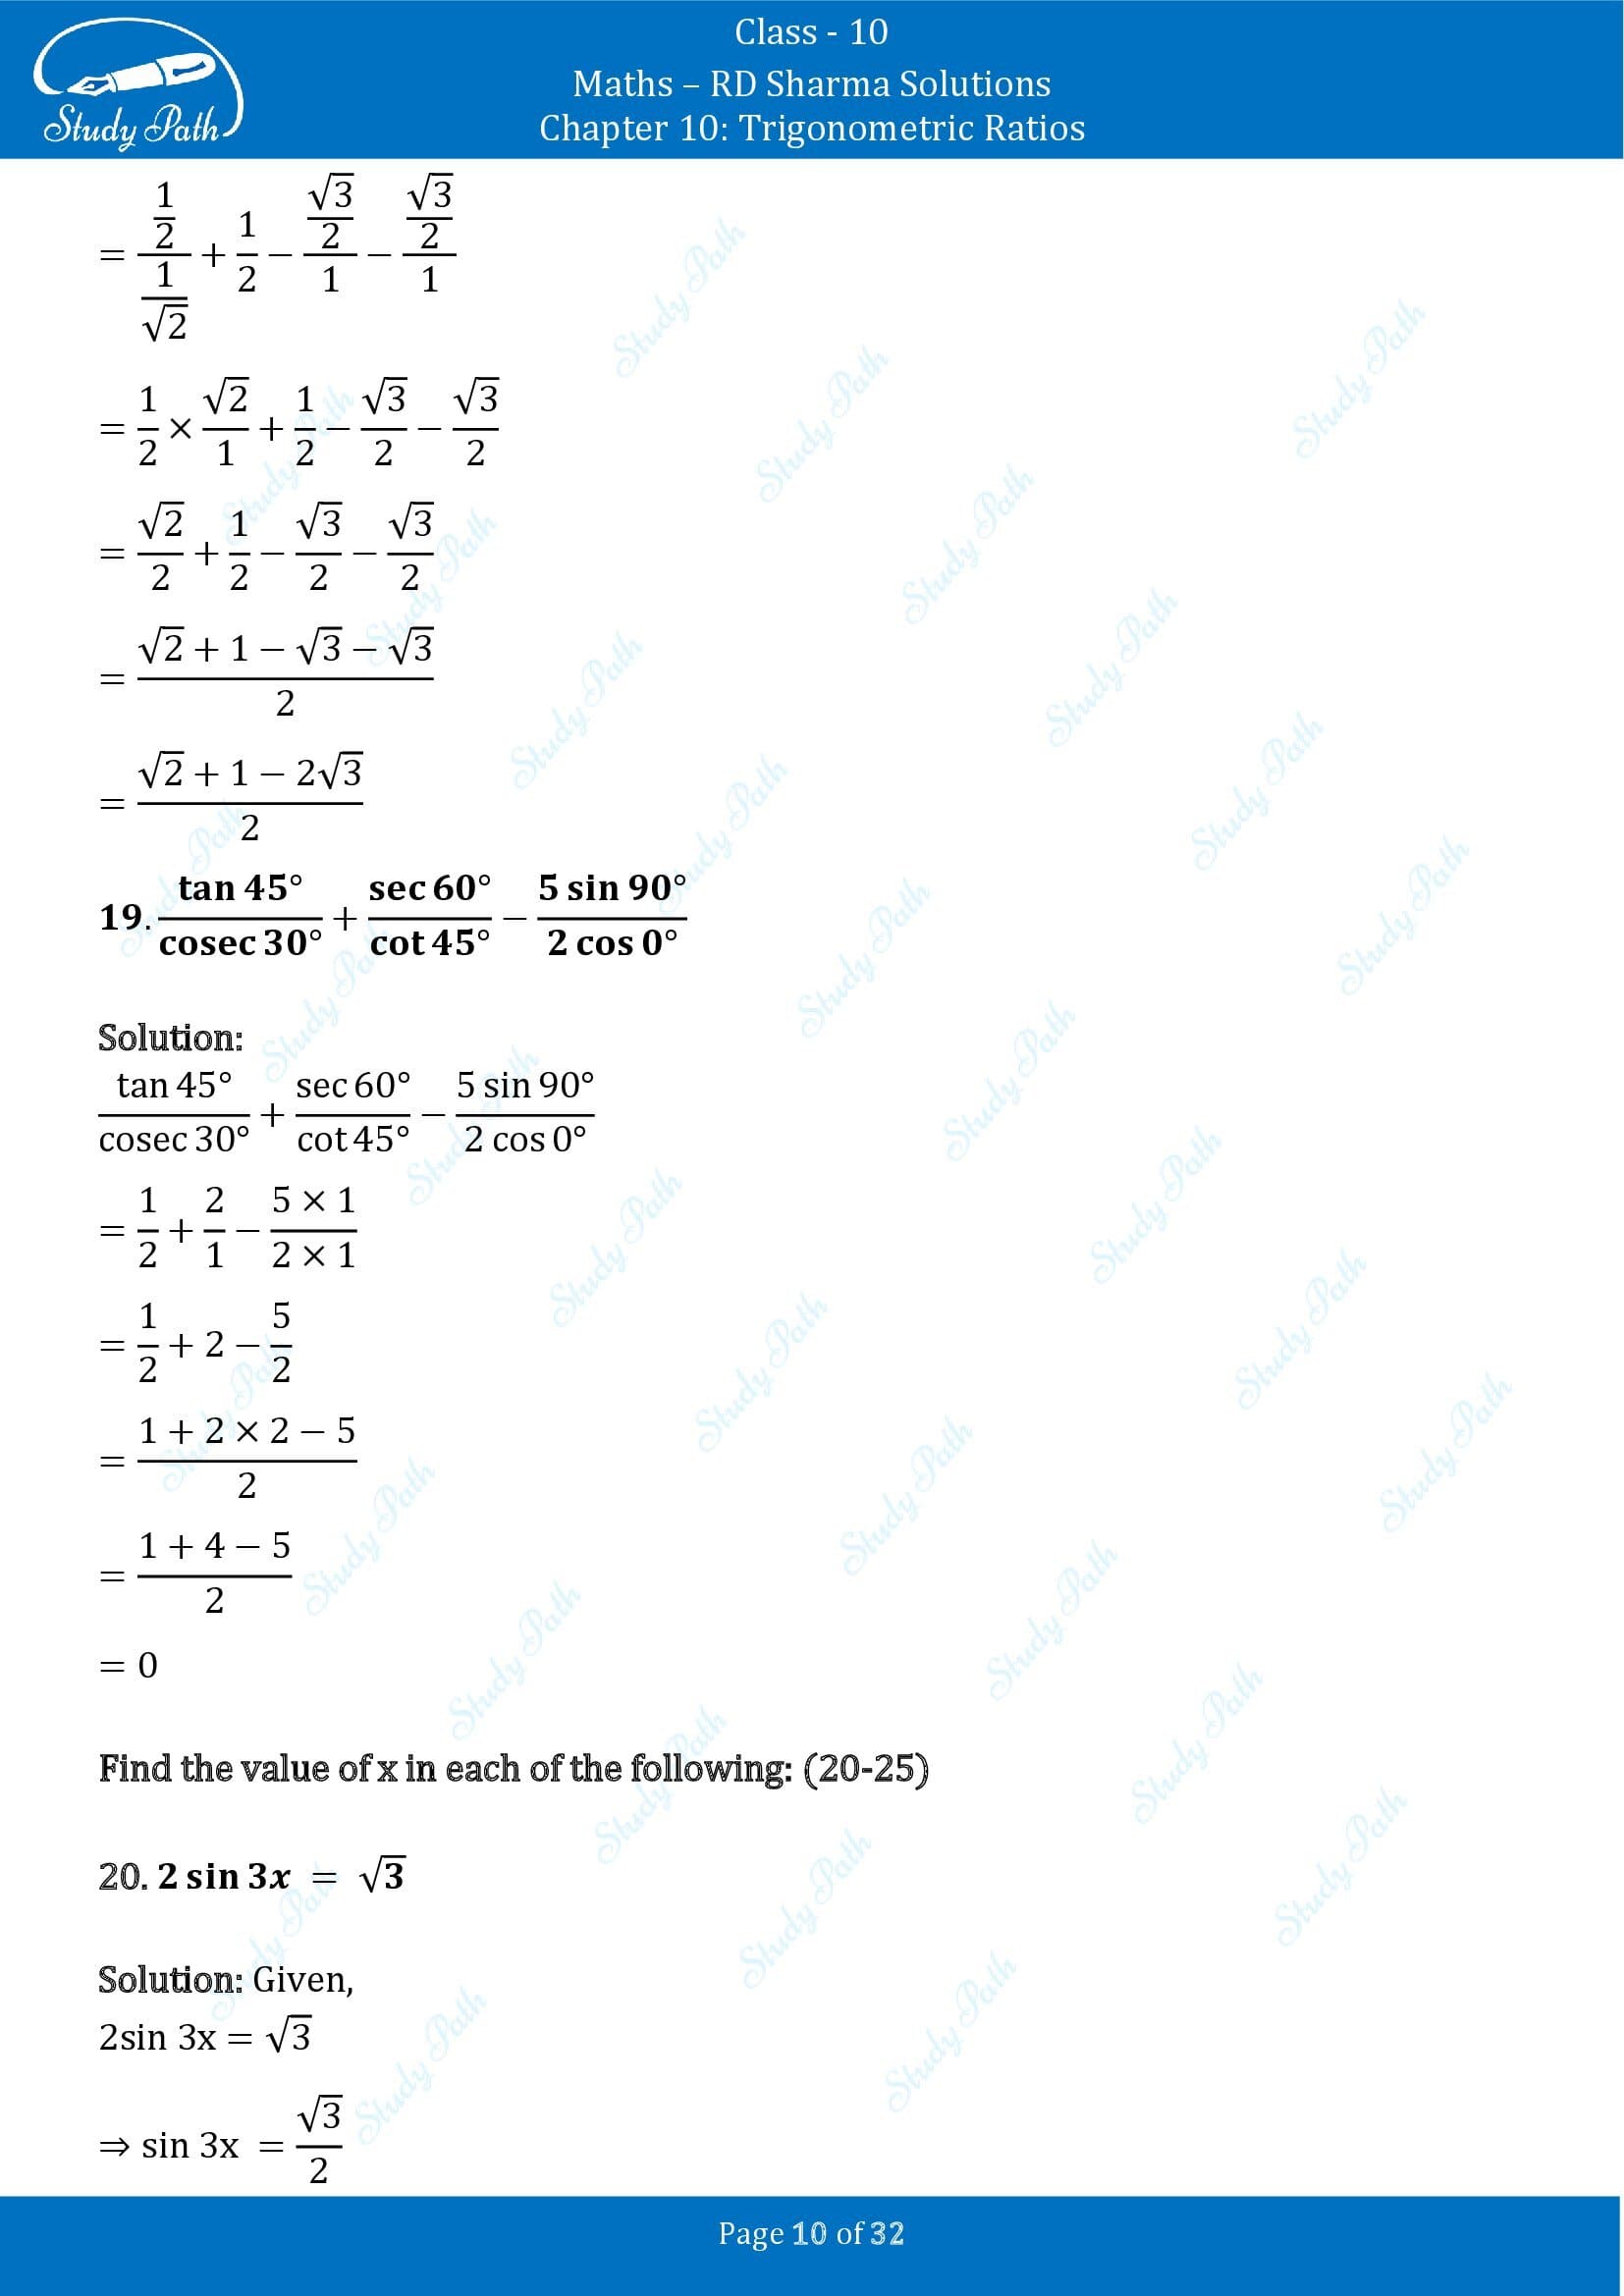 RD Sharma Solutions Class 10 Chapter 10 Trigonometric Ratios Exercise 10.2 00010